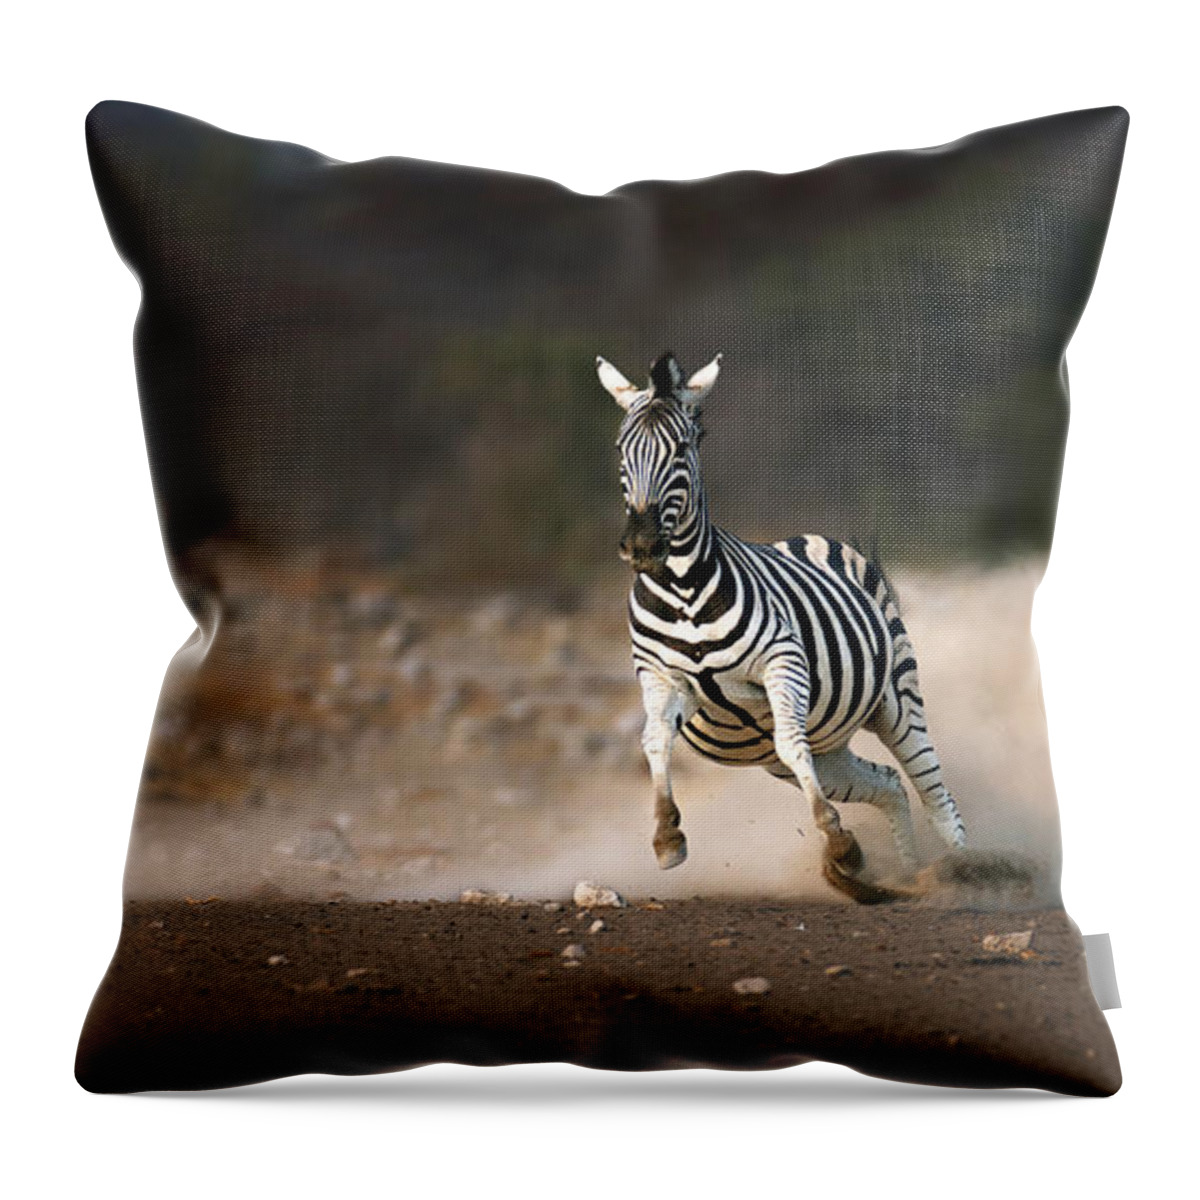 Zebra Throw Pillow featuring the photograph Running Zebra by Johan Swanepoel